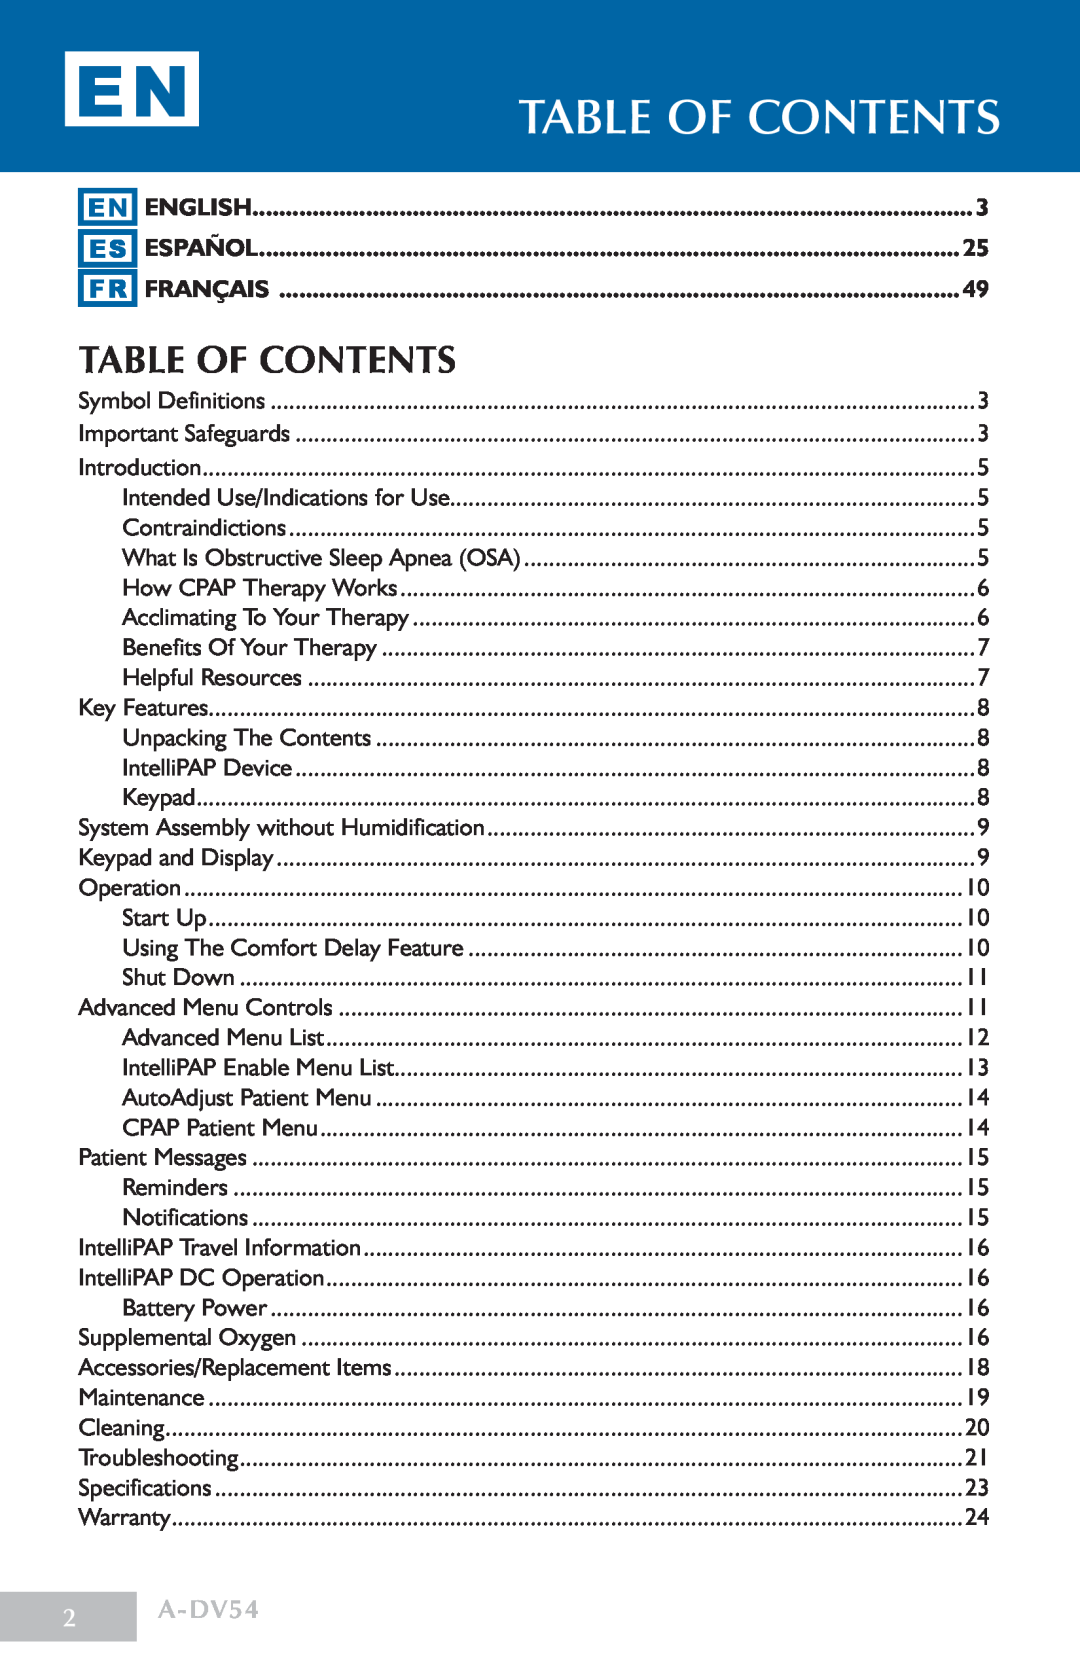 DeVillbiss Air Power Company manual table of contents, Table of Contents, A-DV54, En Es Fr, English, Español, Français 